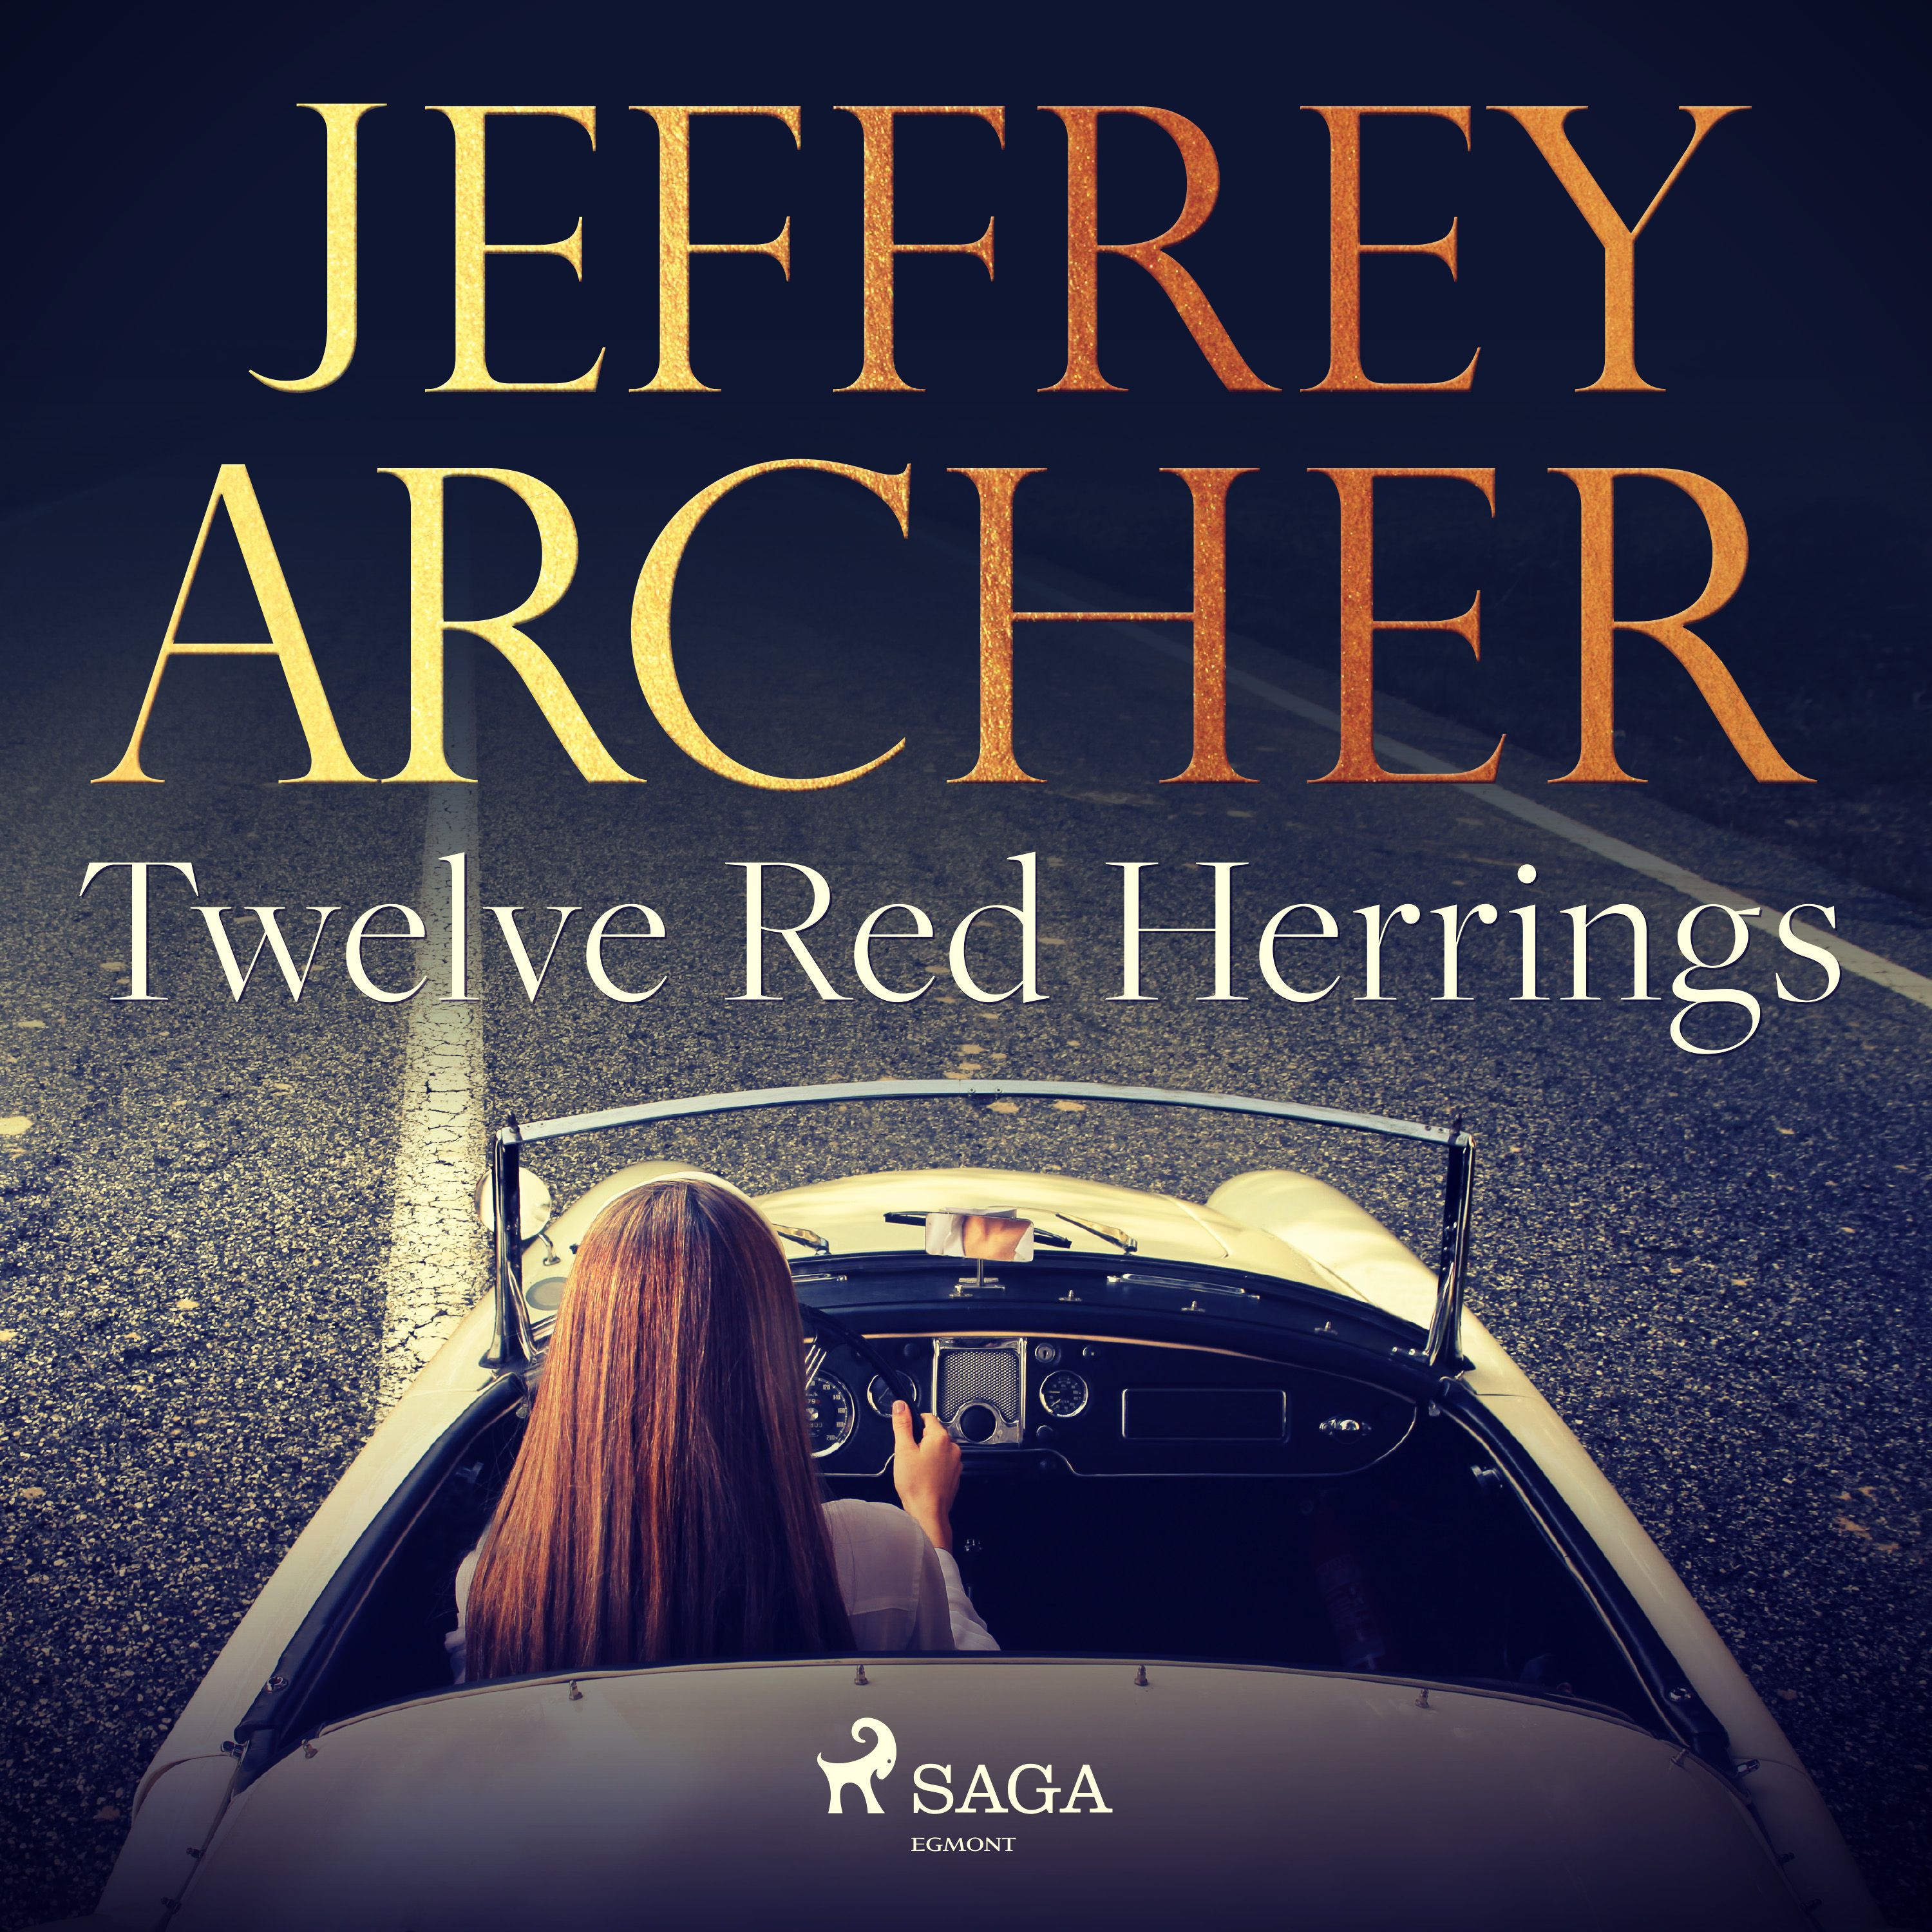 Twelve Red Herrings, ljudbok av Jeffrey Archer